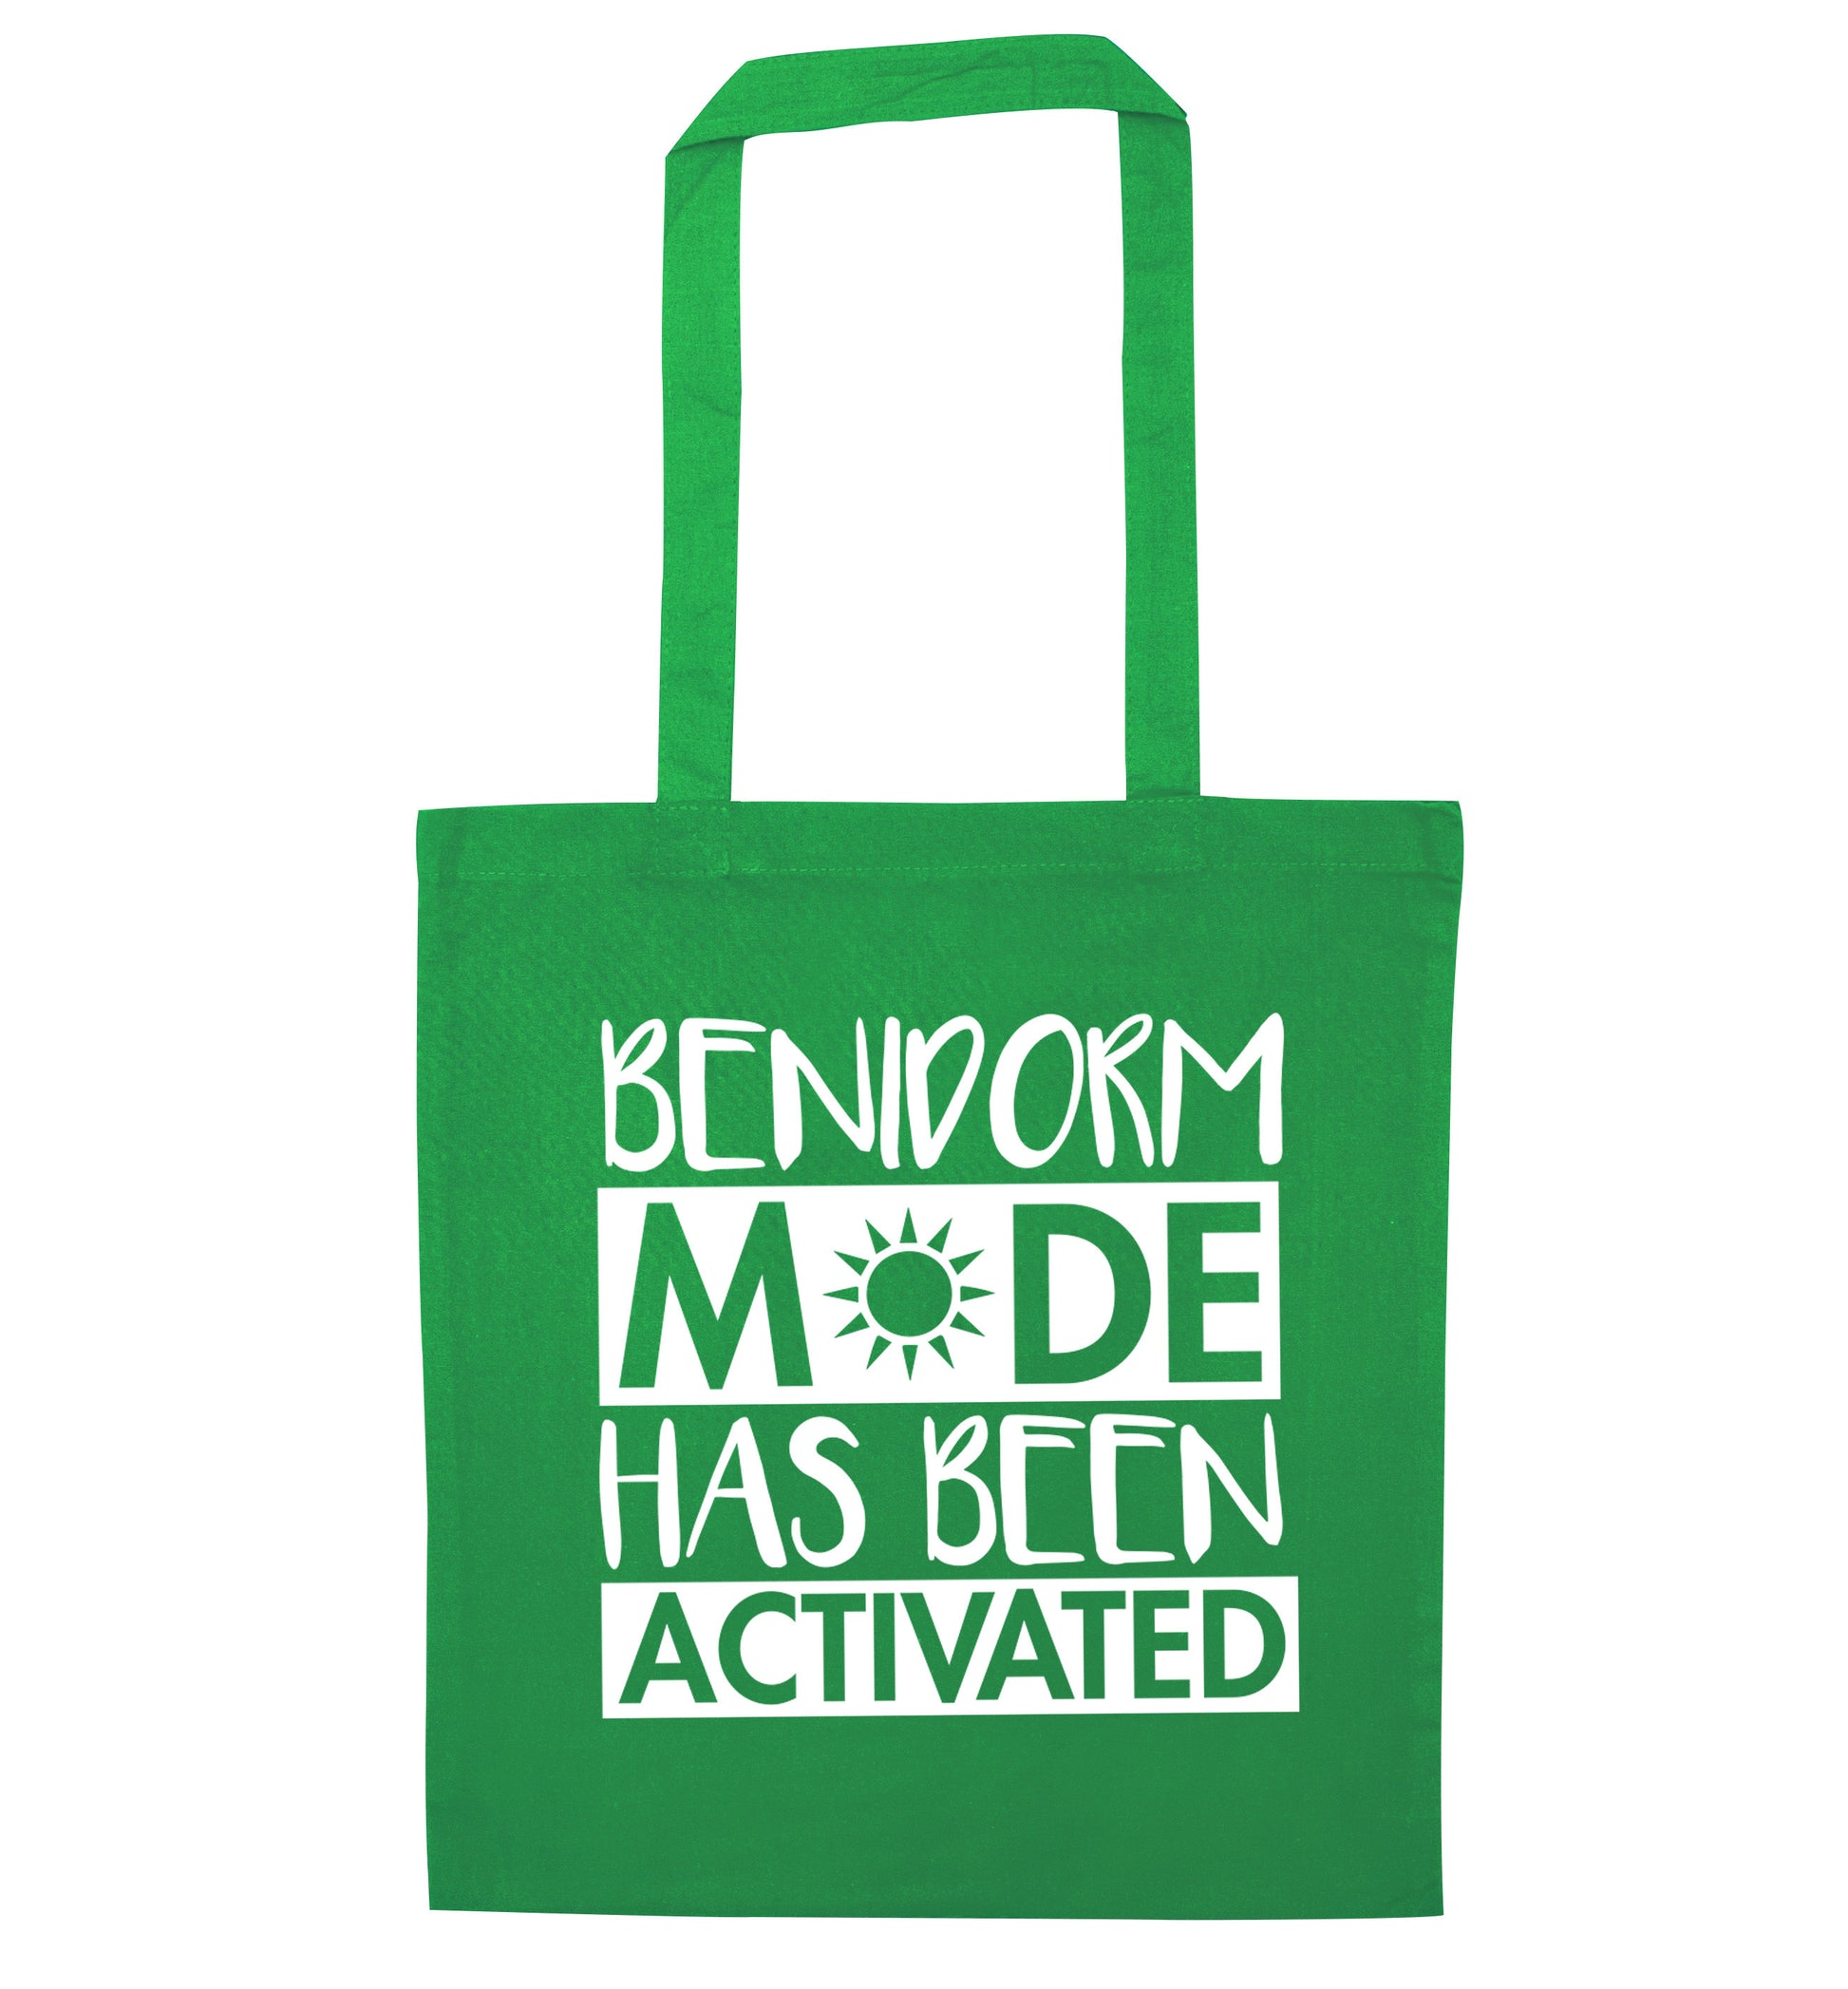 Benidorm mode has been activated green tote bag